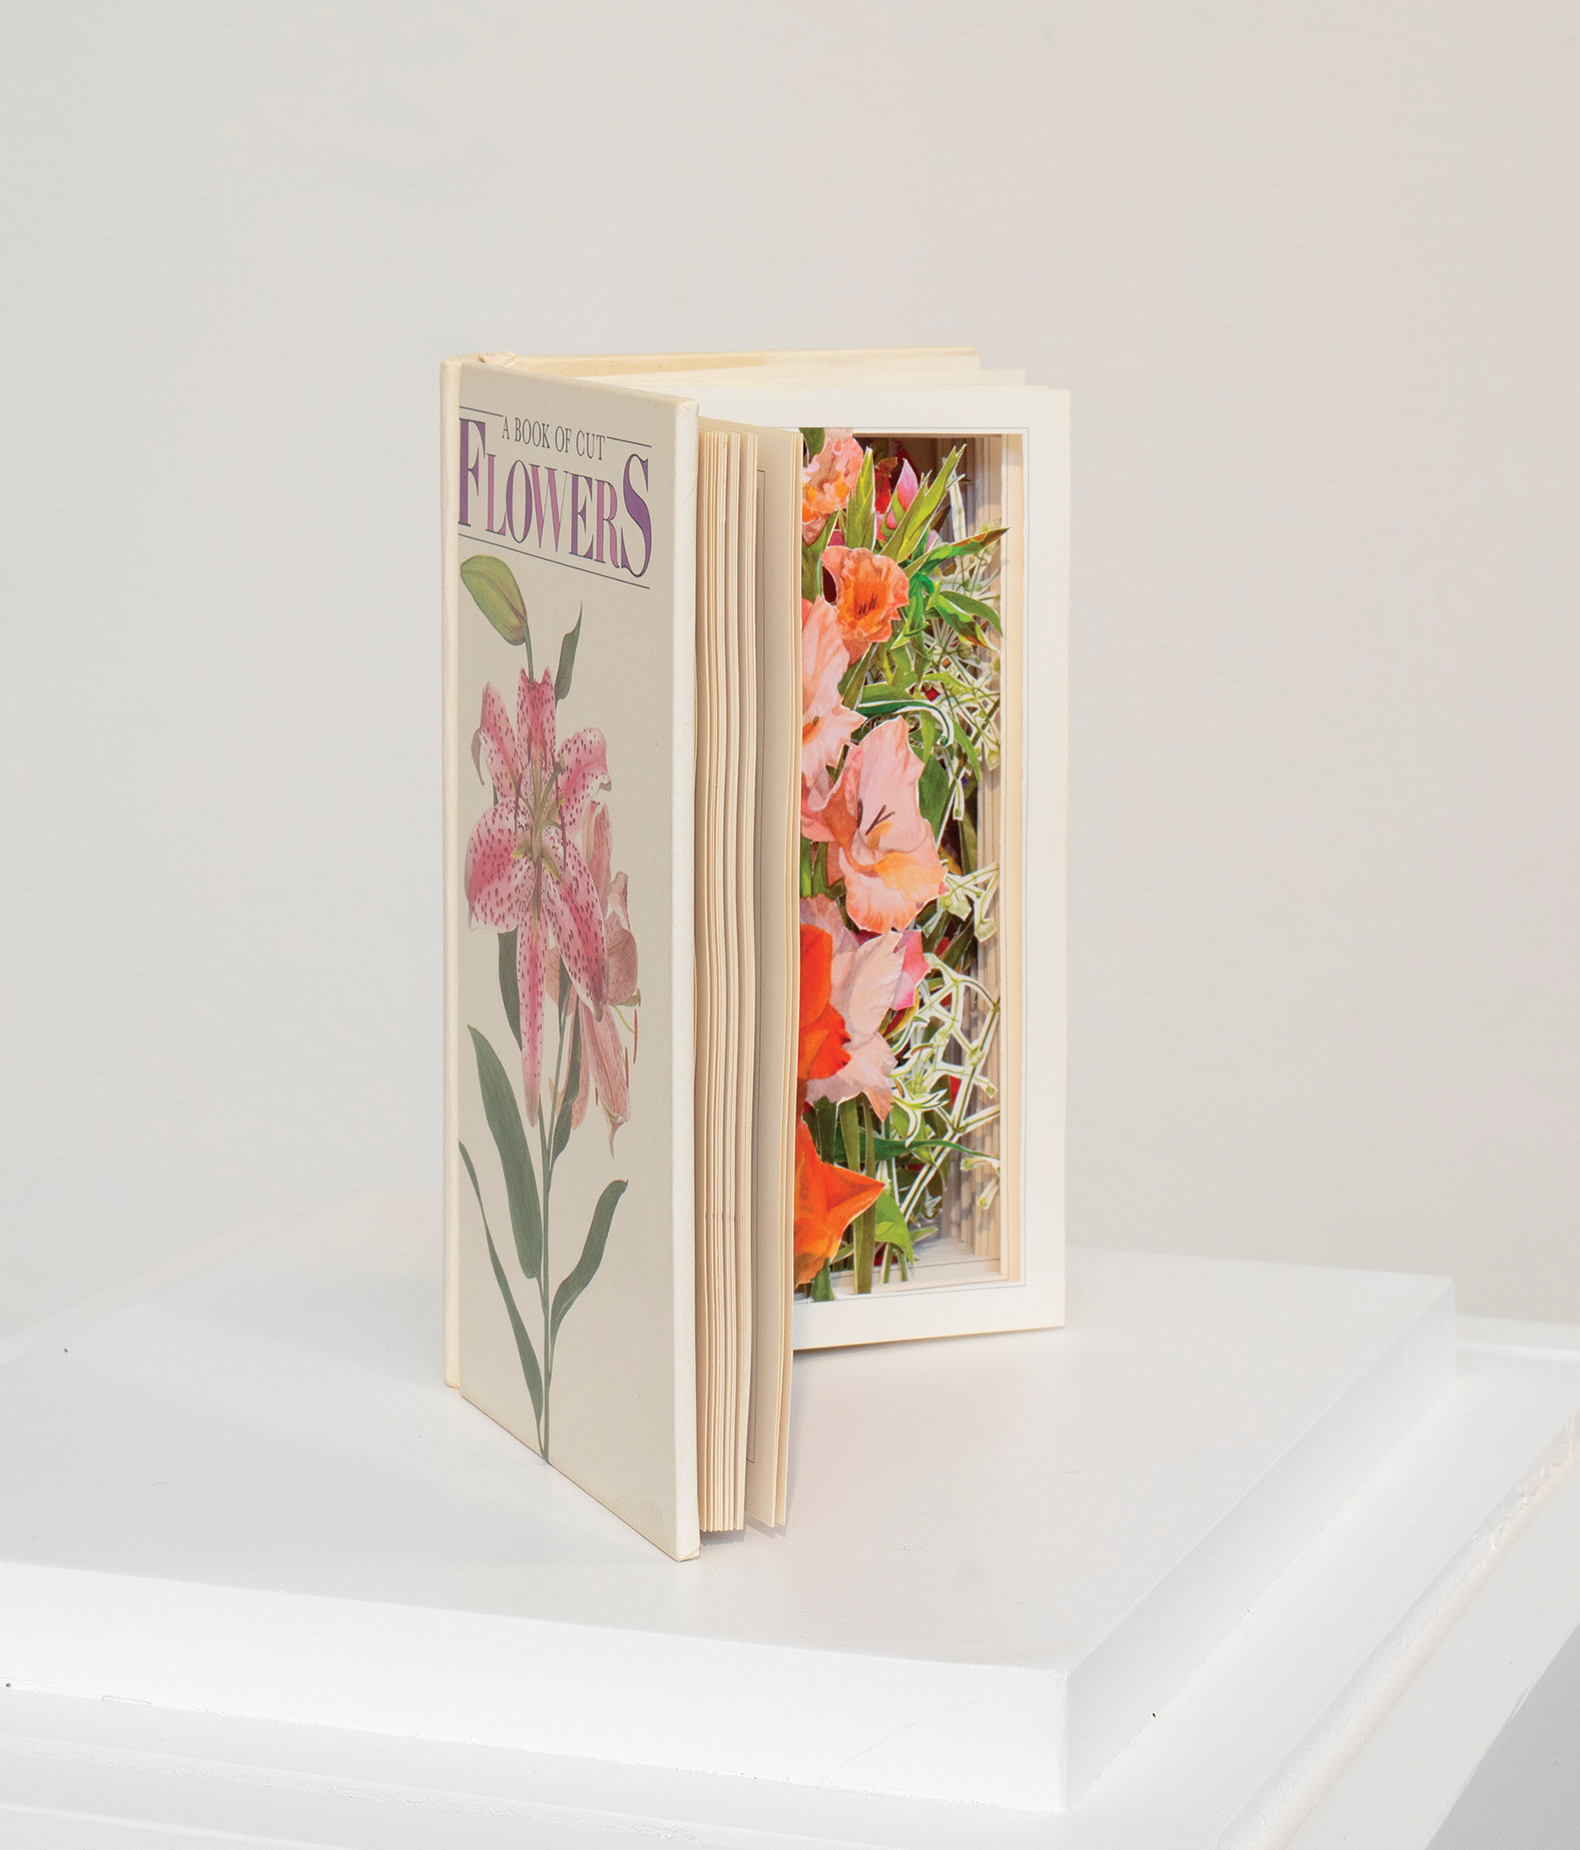 Jill Magid, “Suggested Arrangements: Gladiolus”, 2022. Libro (A Book of Cut Flowers), páginas cortadas. 15.9 x 19.1 x 8.3cm